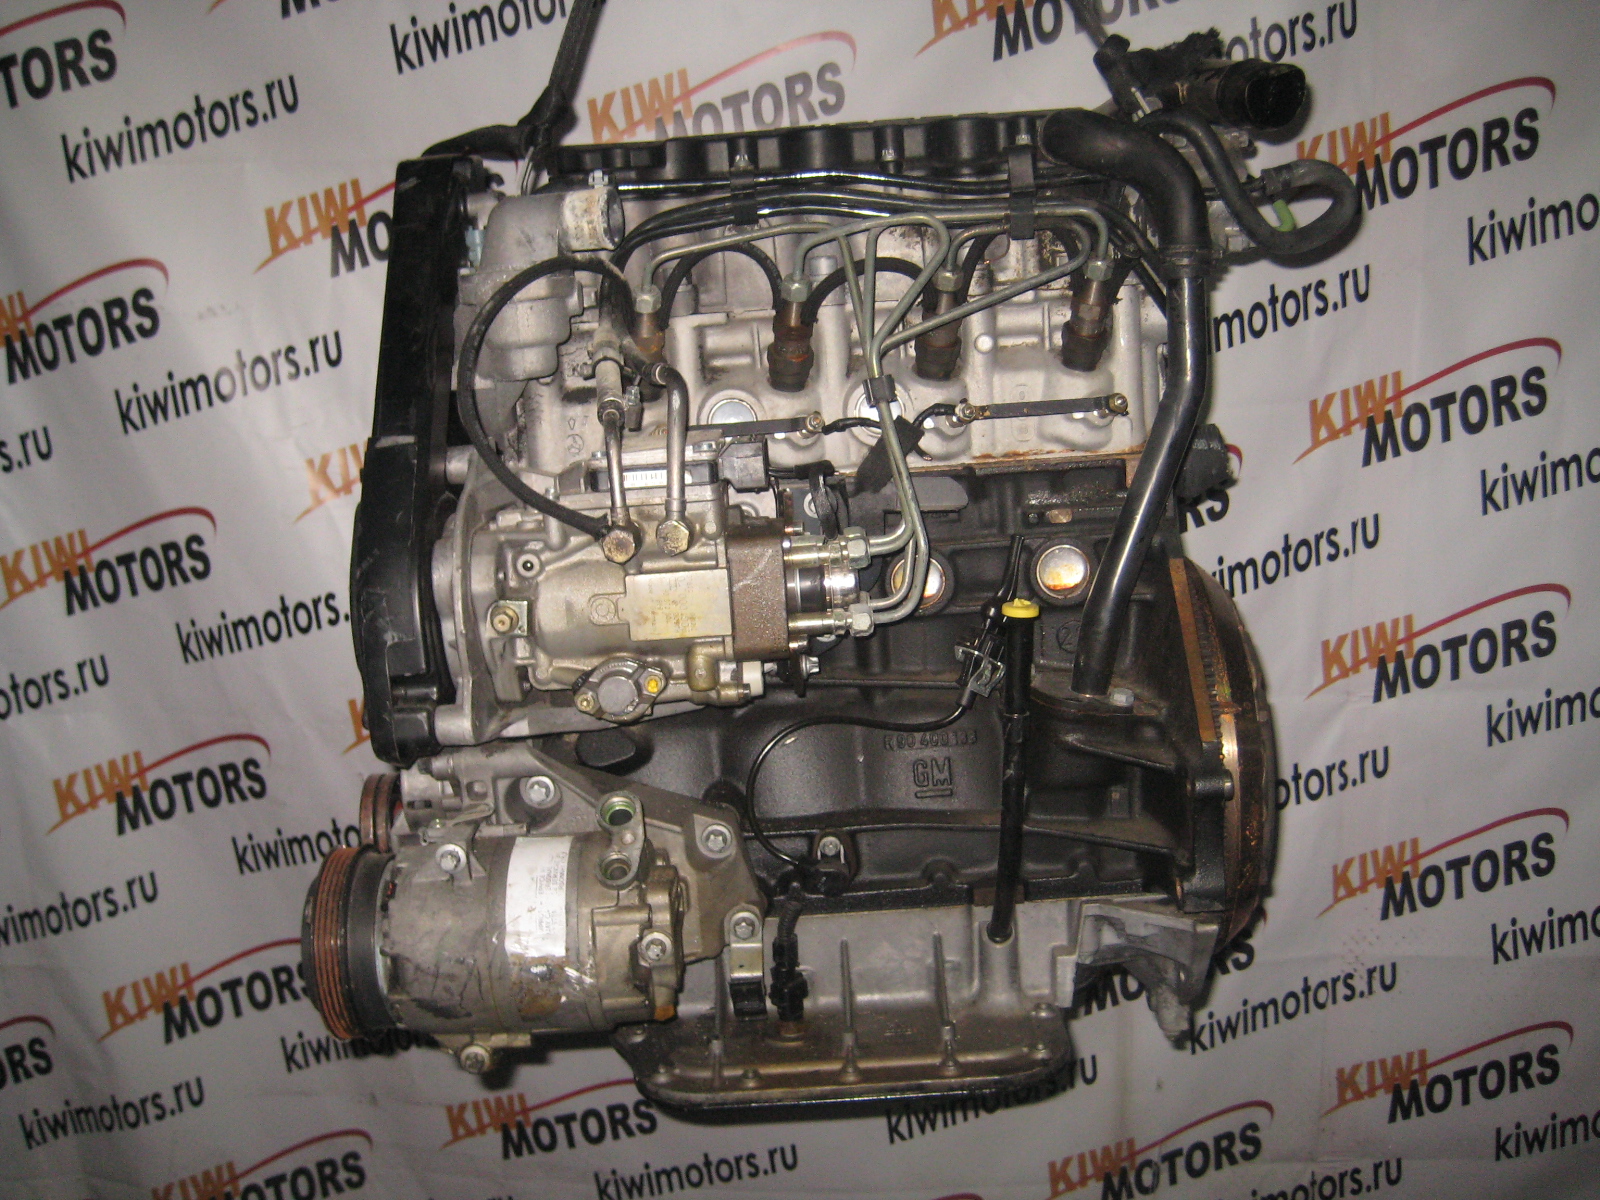 Двигатели 17d, 17dr, 17dt opel: характеристики, особенности, ресурс - мотор инфо